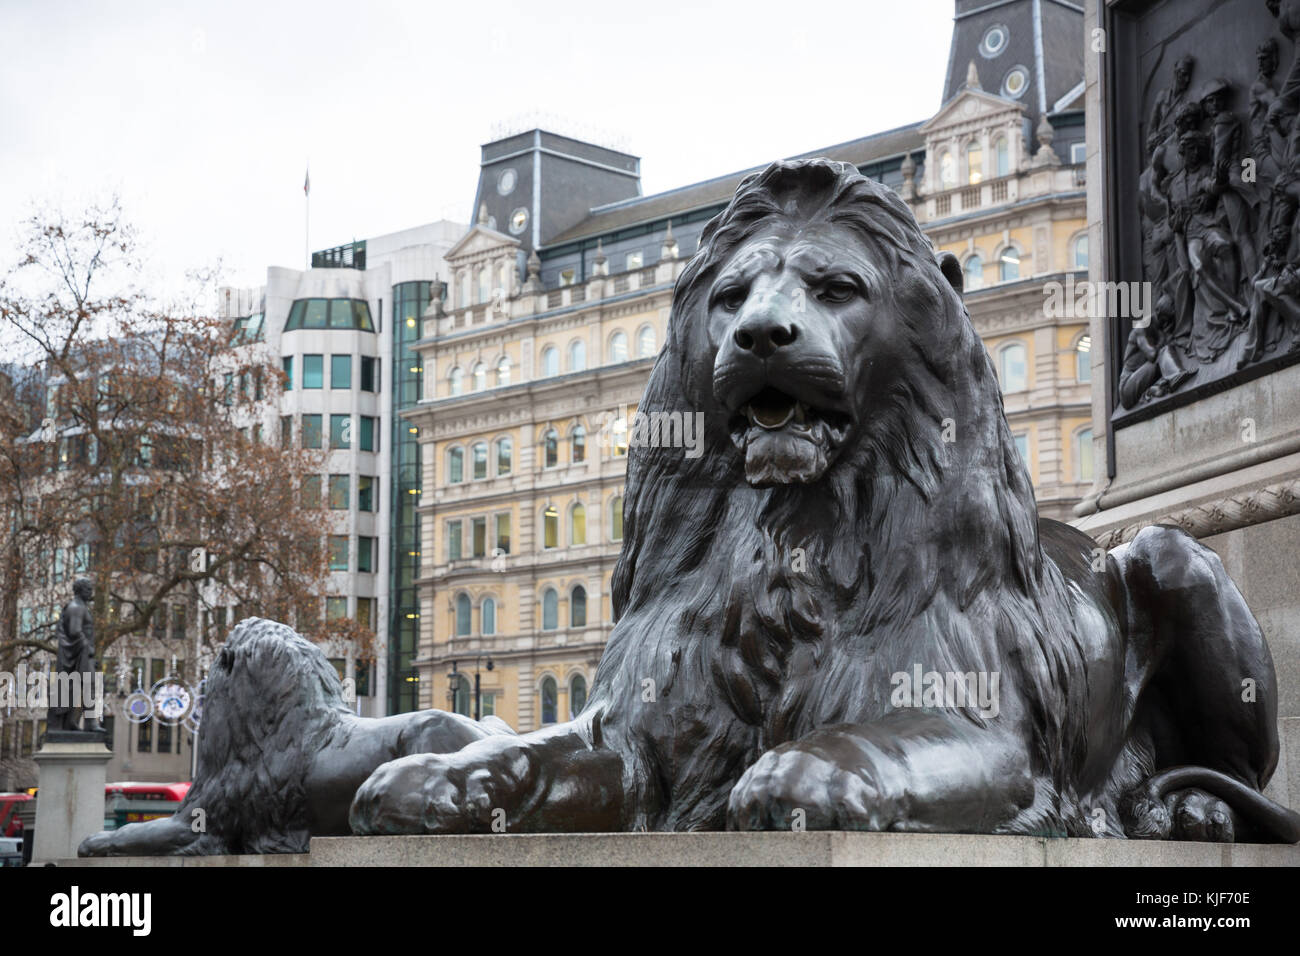 Lion statues at Trafalgar Square - London, UK Stock Photo